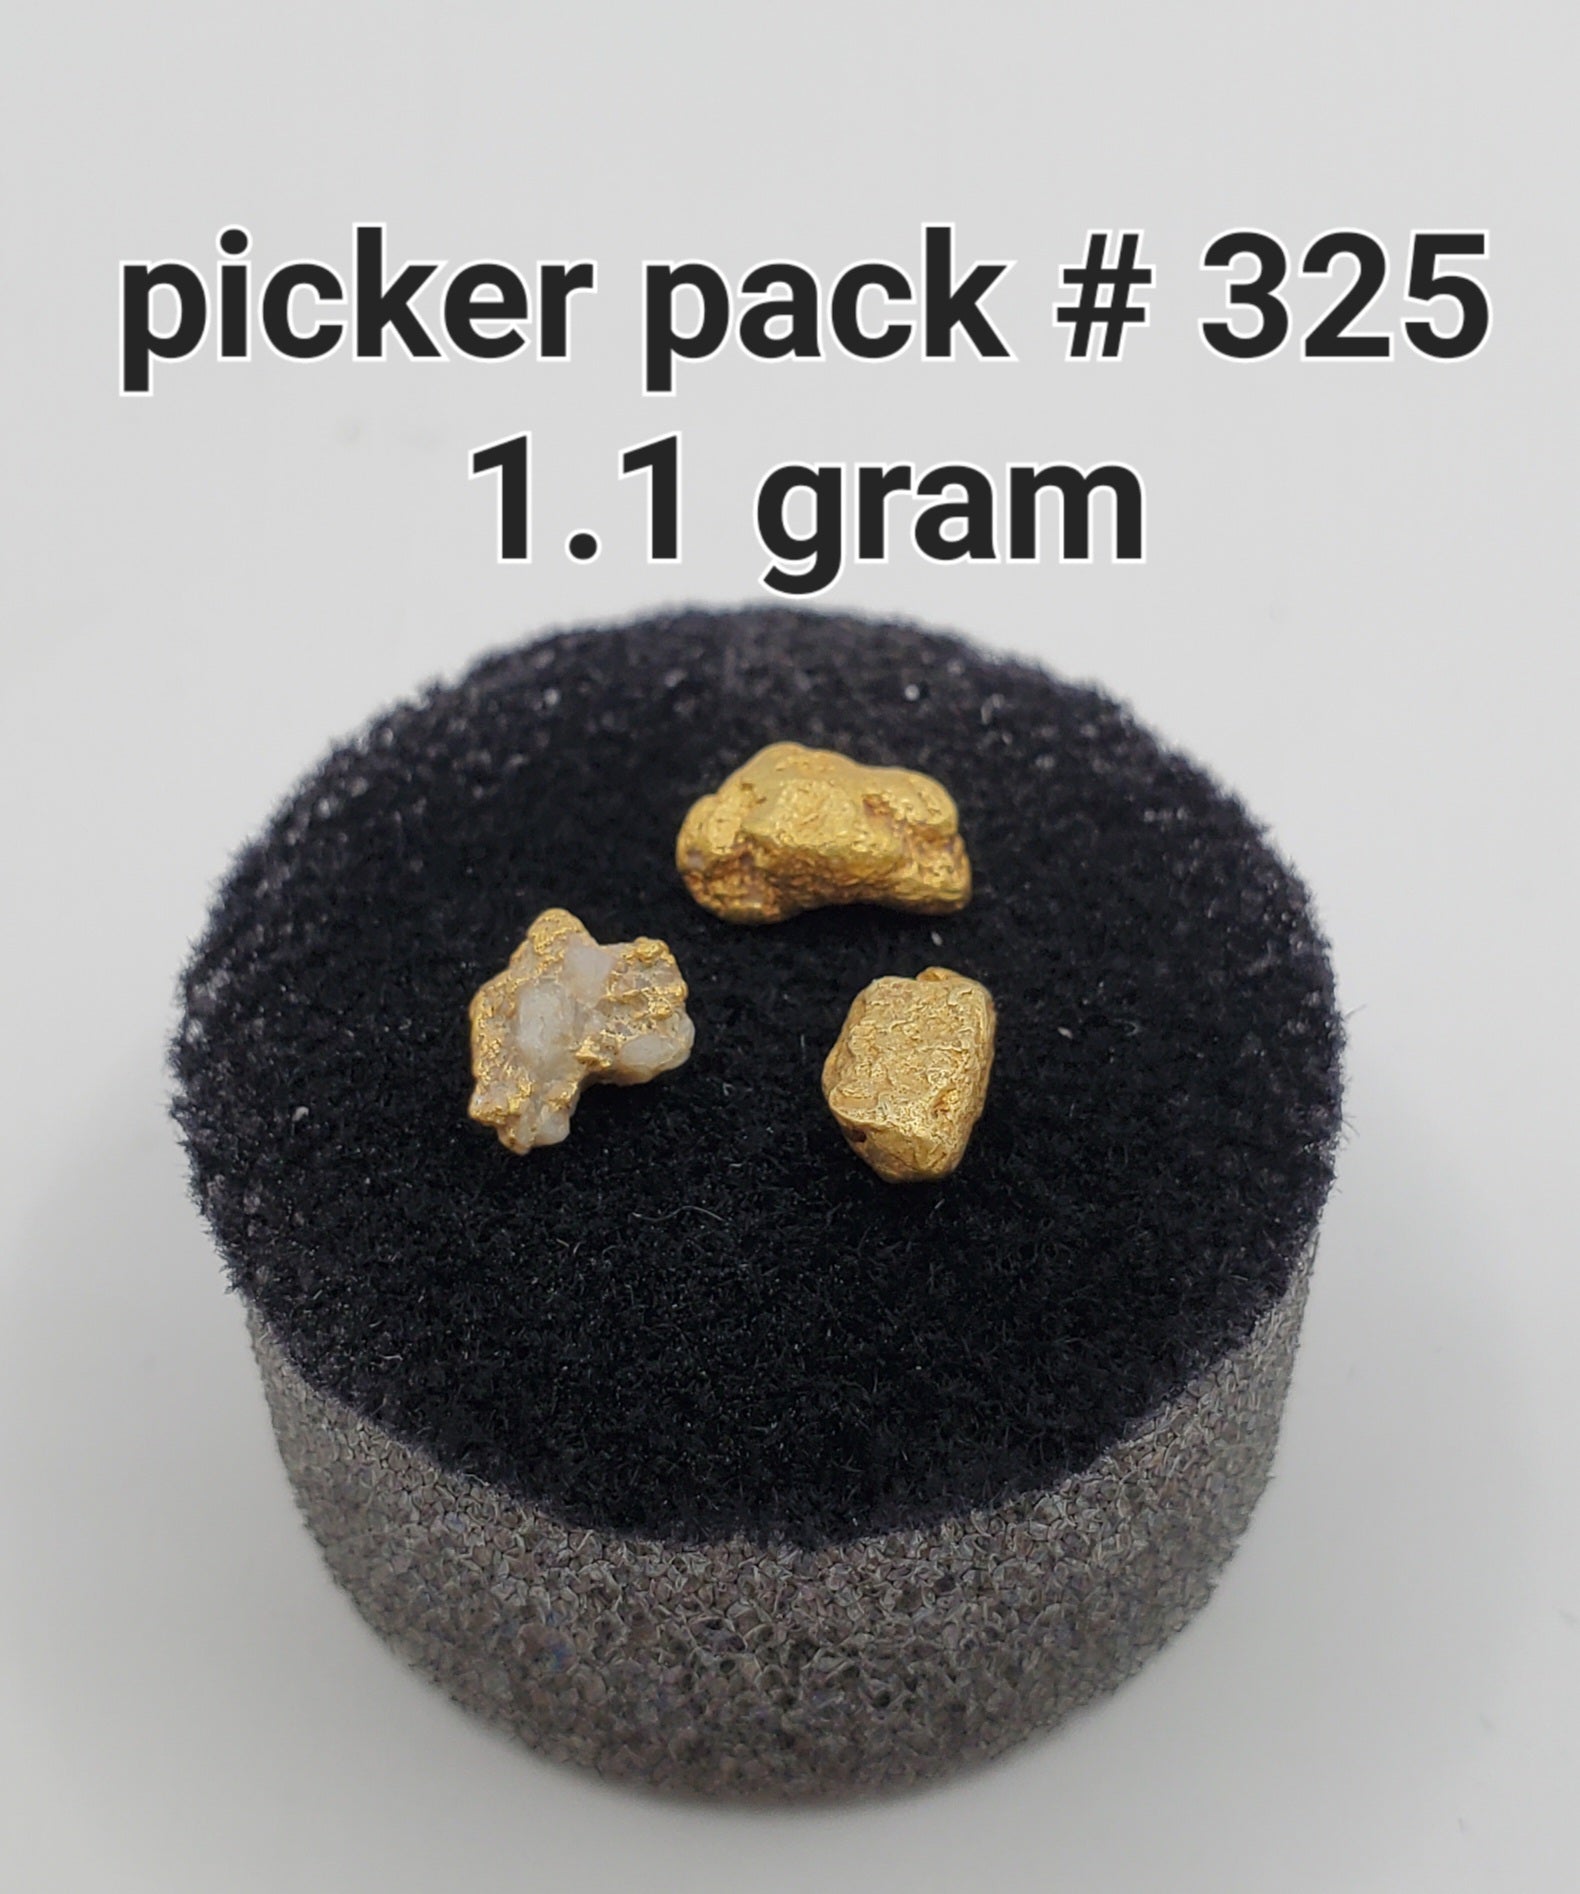 GOLD RUSH PICKER PACK#325